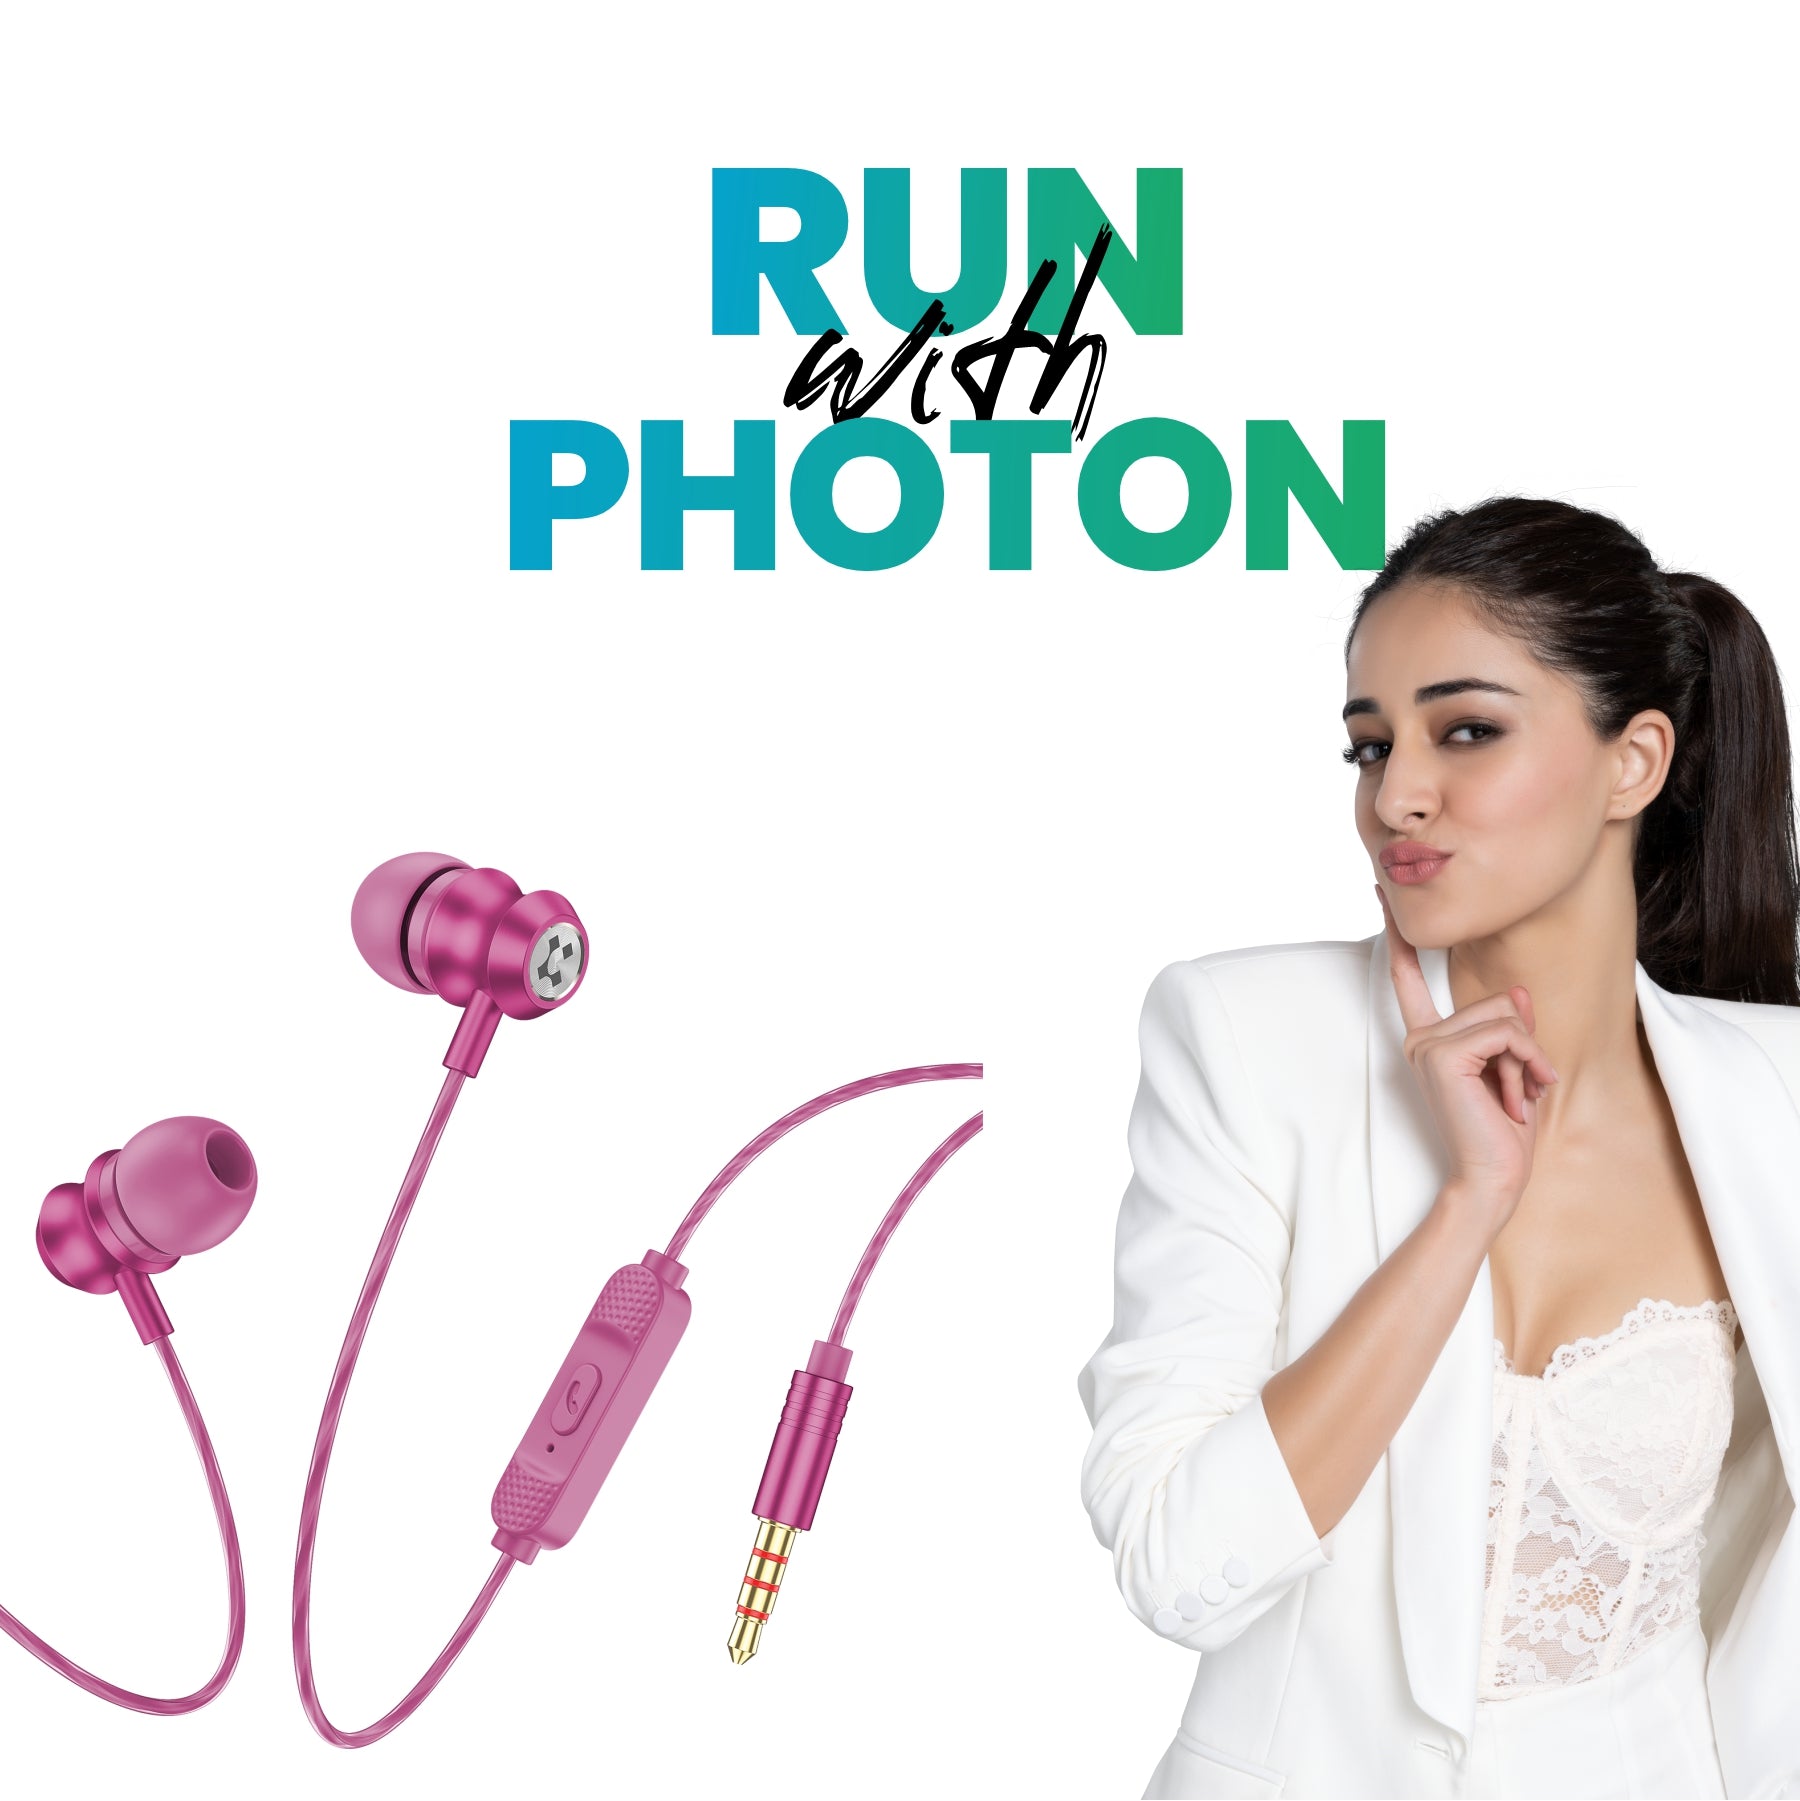  LYNE Photon 4 Wired Earphones